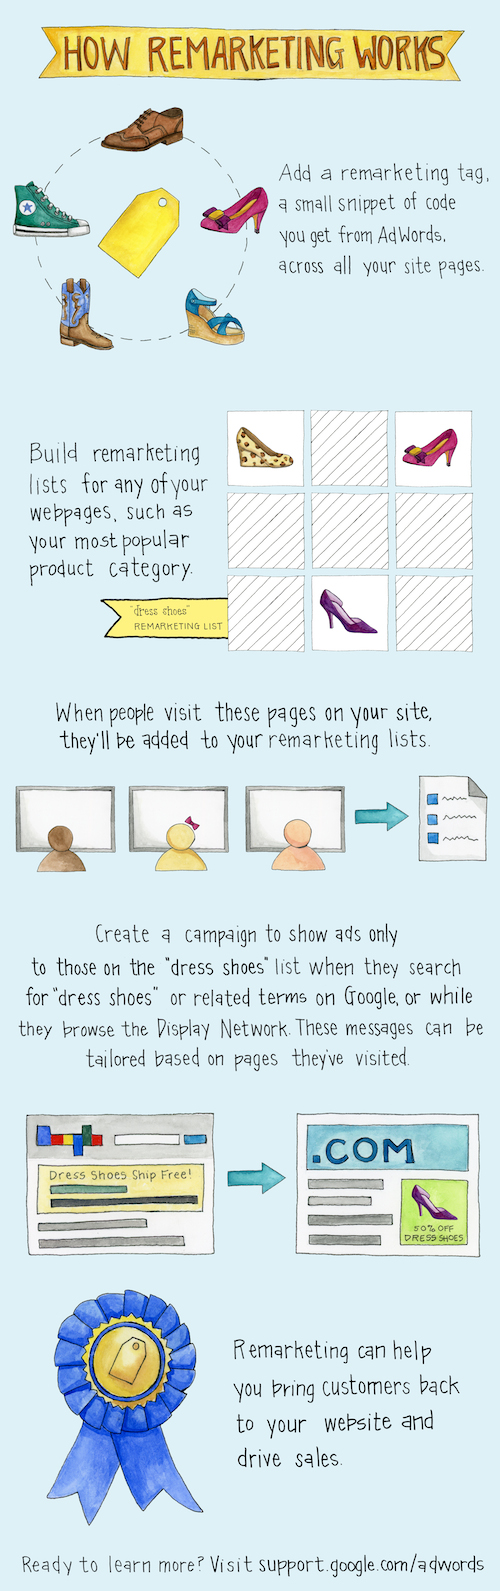 Google Remarketing Infographic